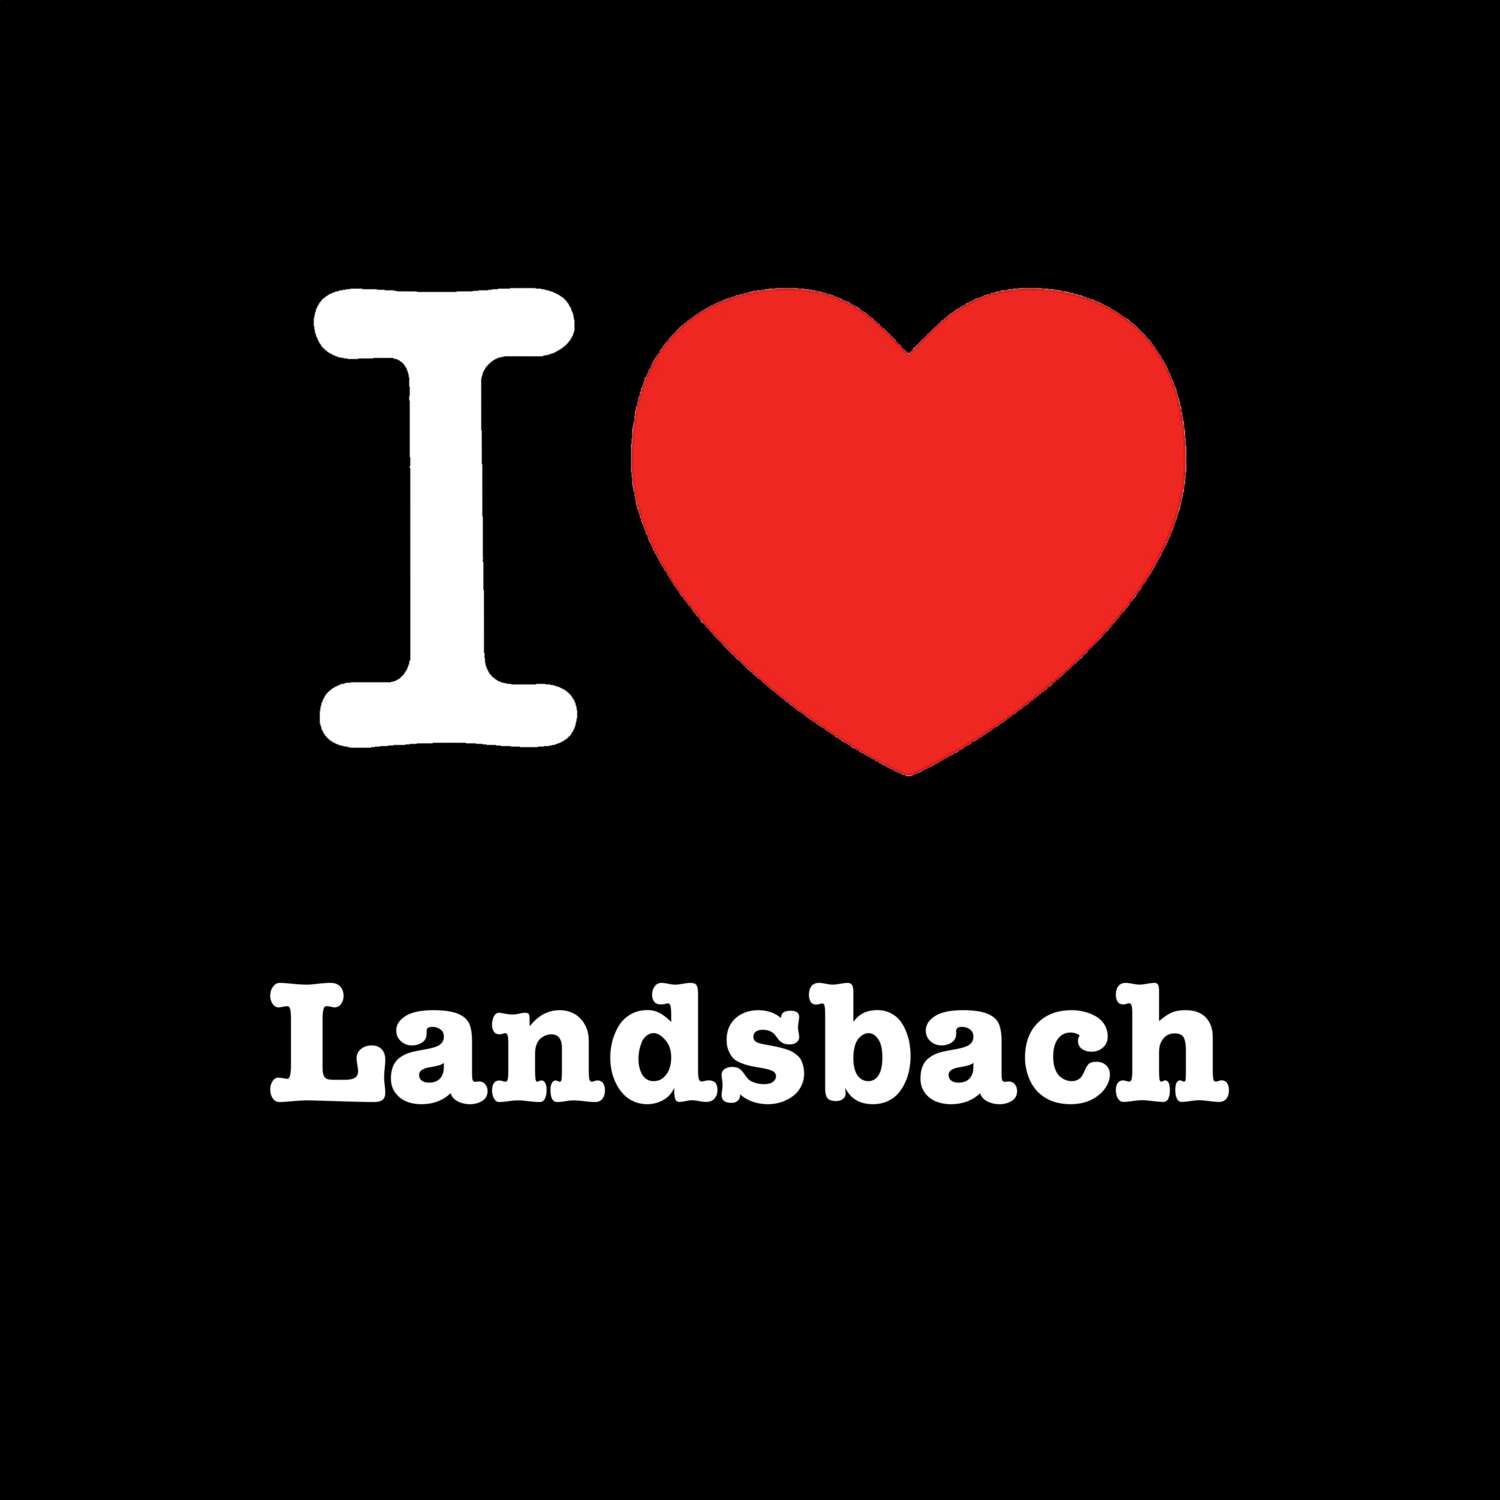 Landsbach T-Shirt »I love«